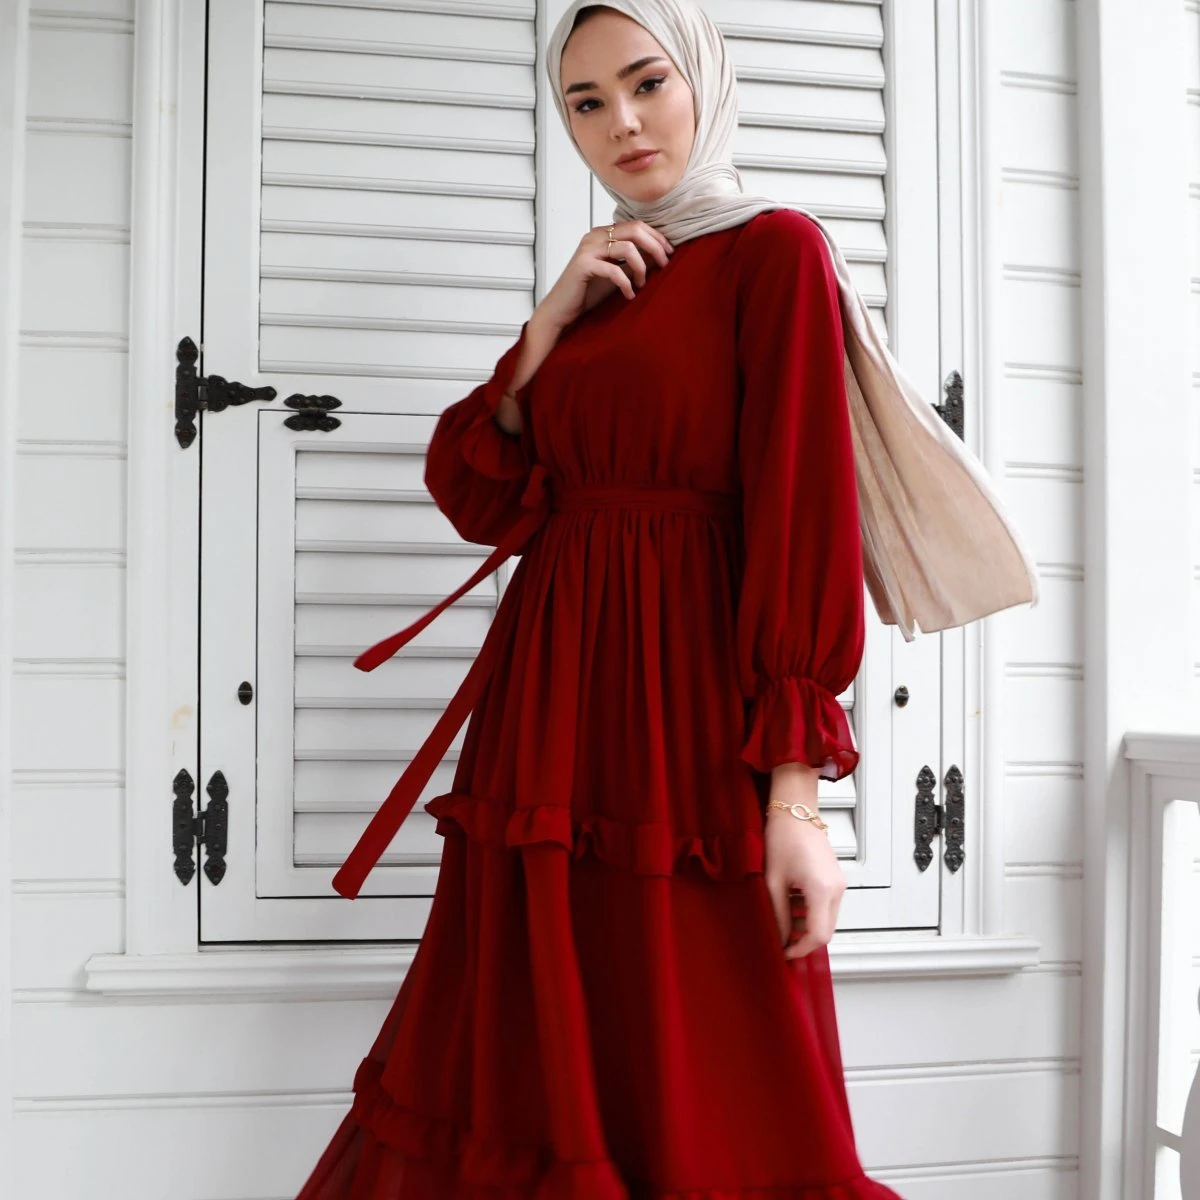 

MOTIVE FORCE New Arrival Fashion Arabian Women Dress Islamic Elegant Ladies Slim Ruffle Turkish Muslim Dresses, Picture